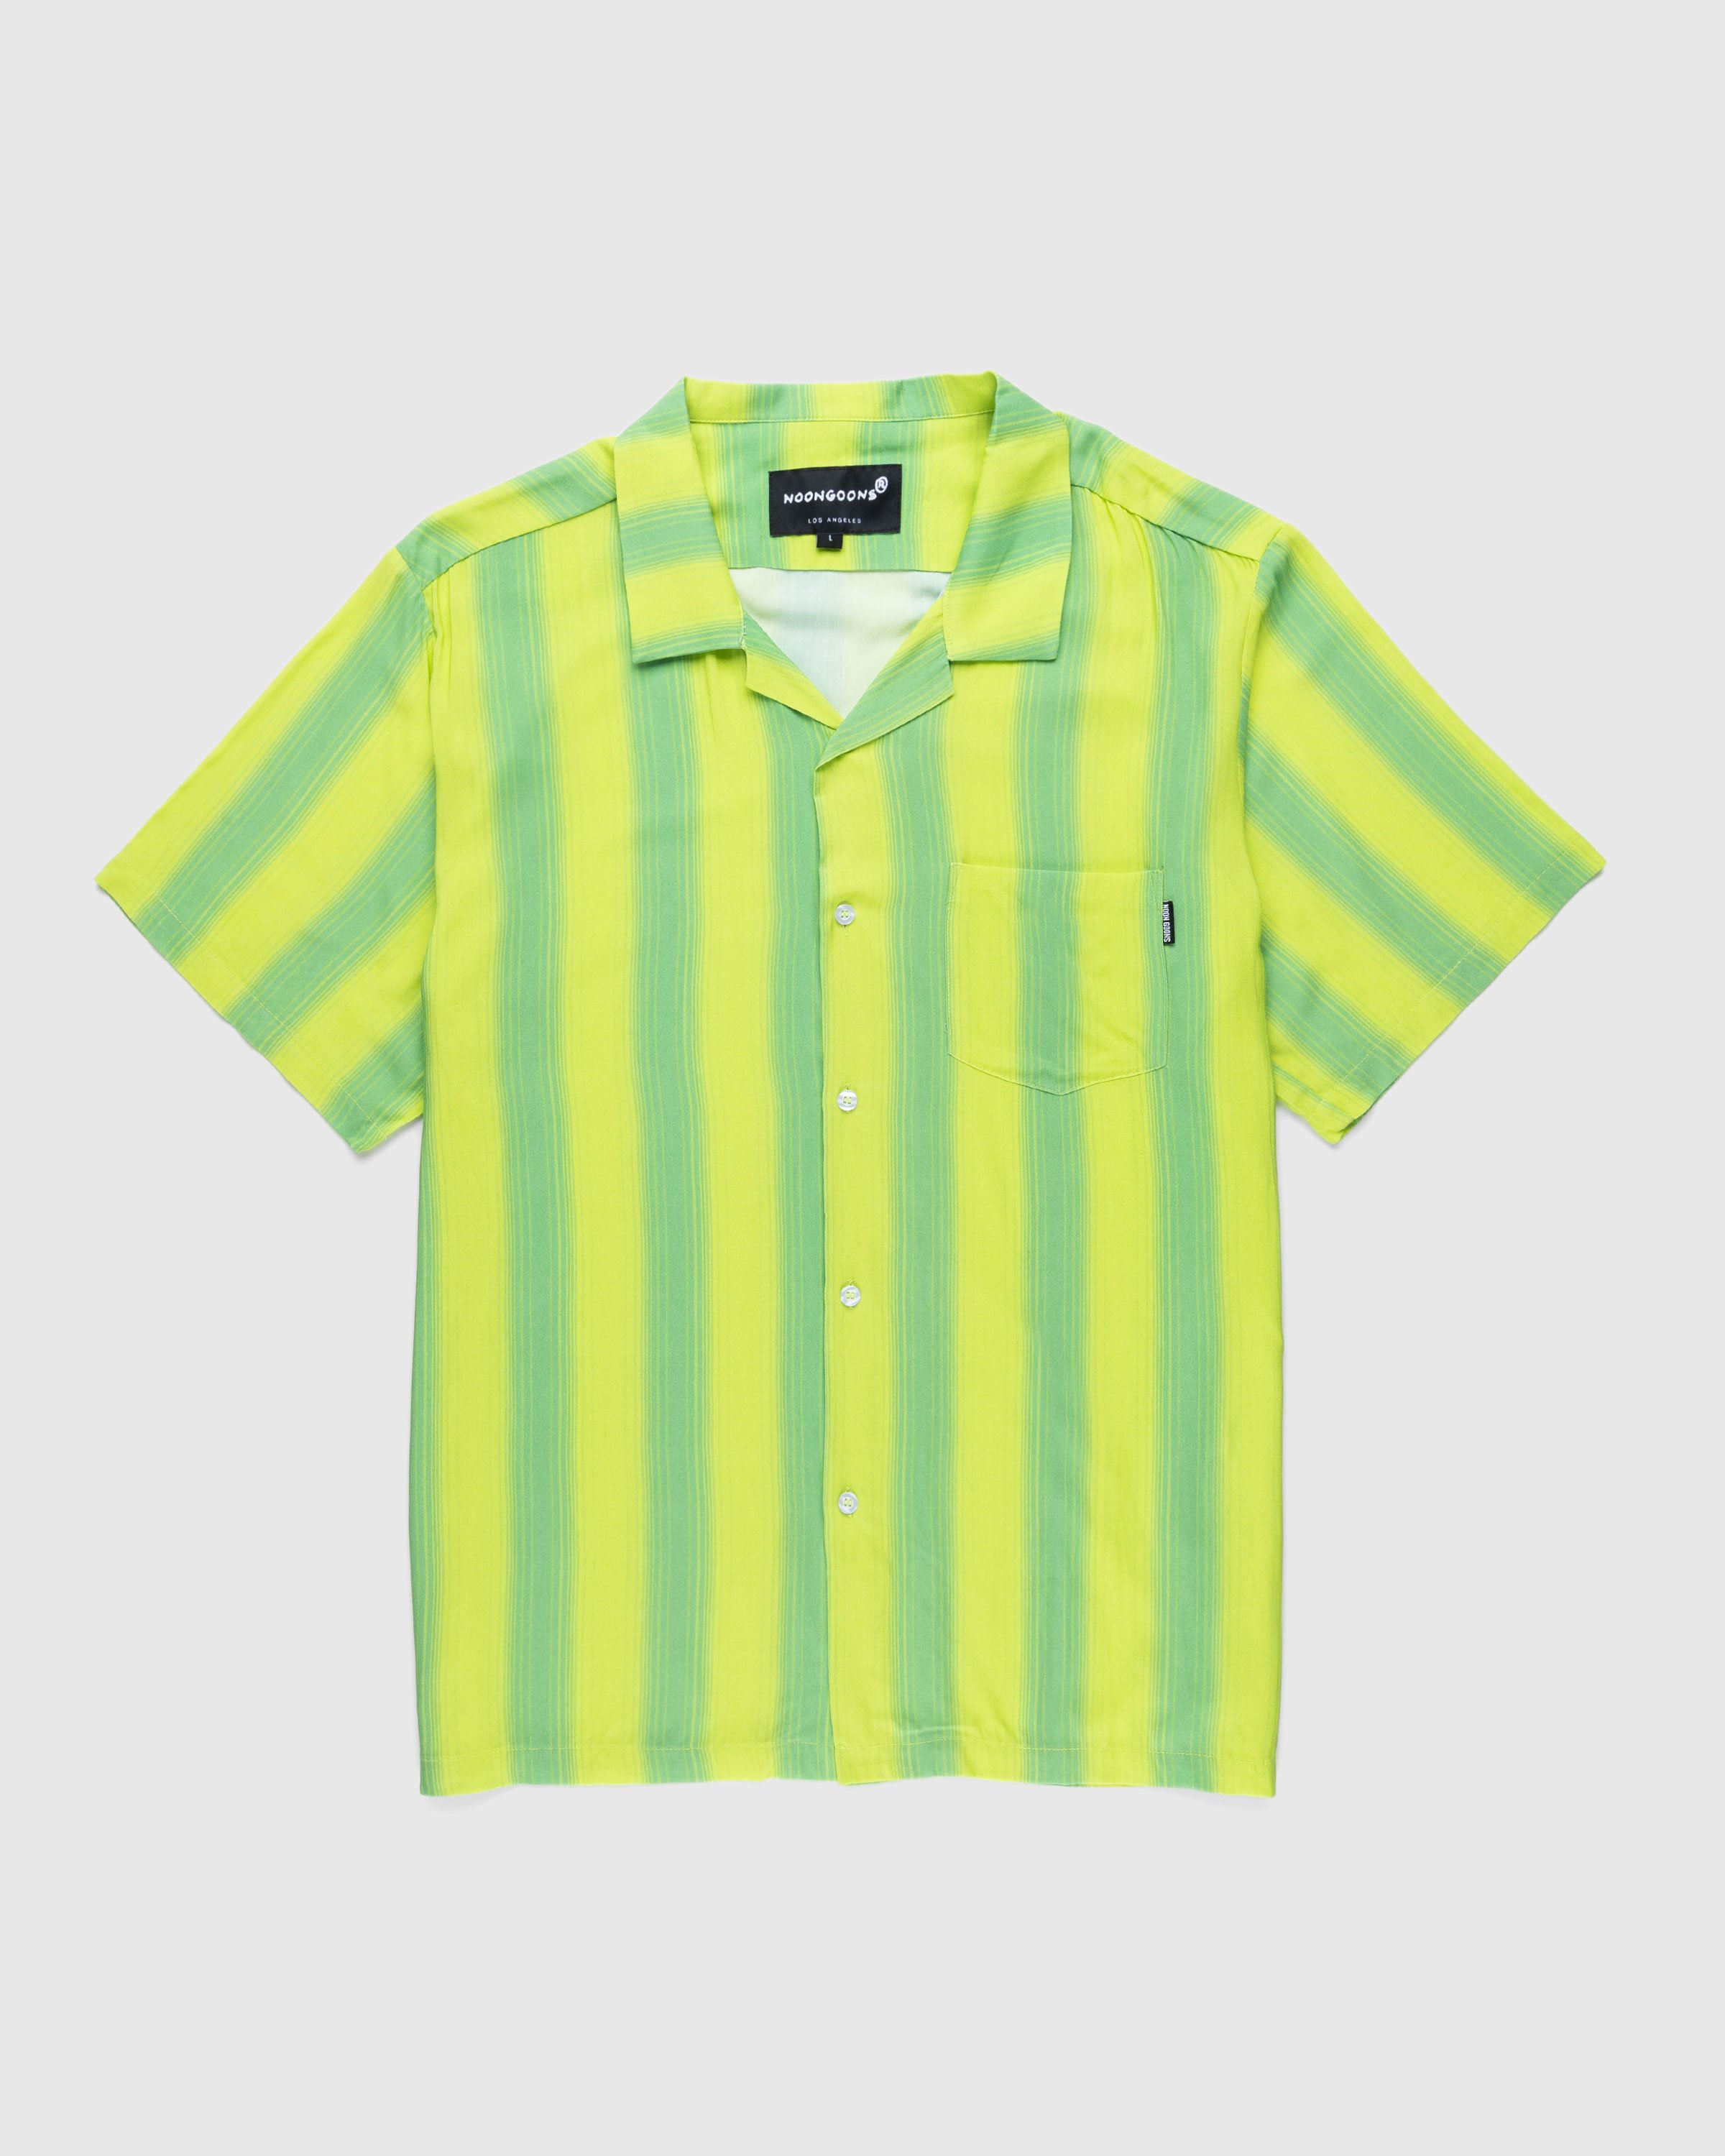 Noon Goons - High Society Shirt Limeade - Clothing - Green - Image 1